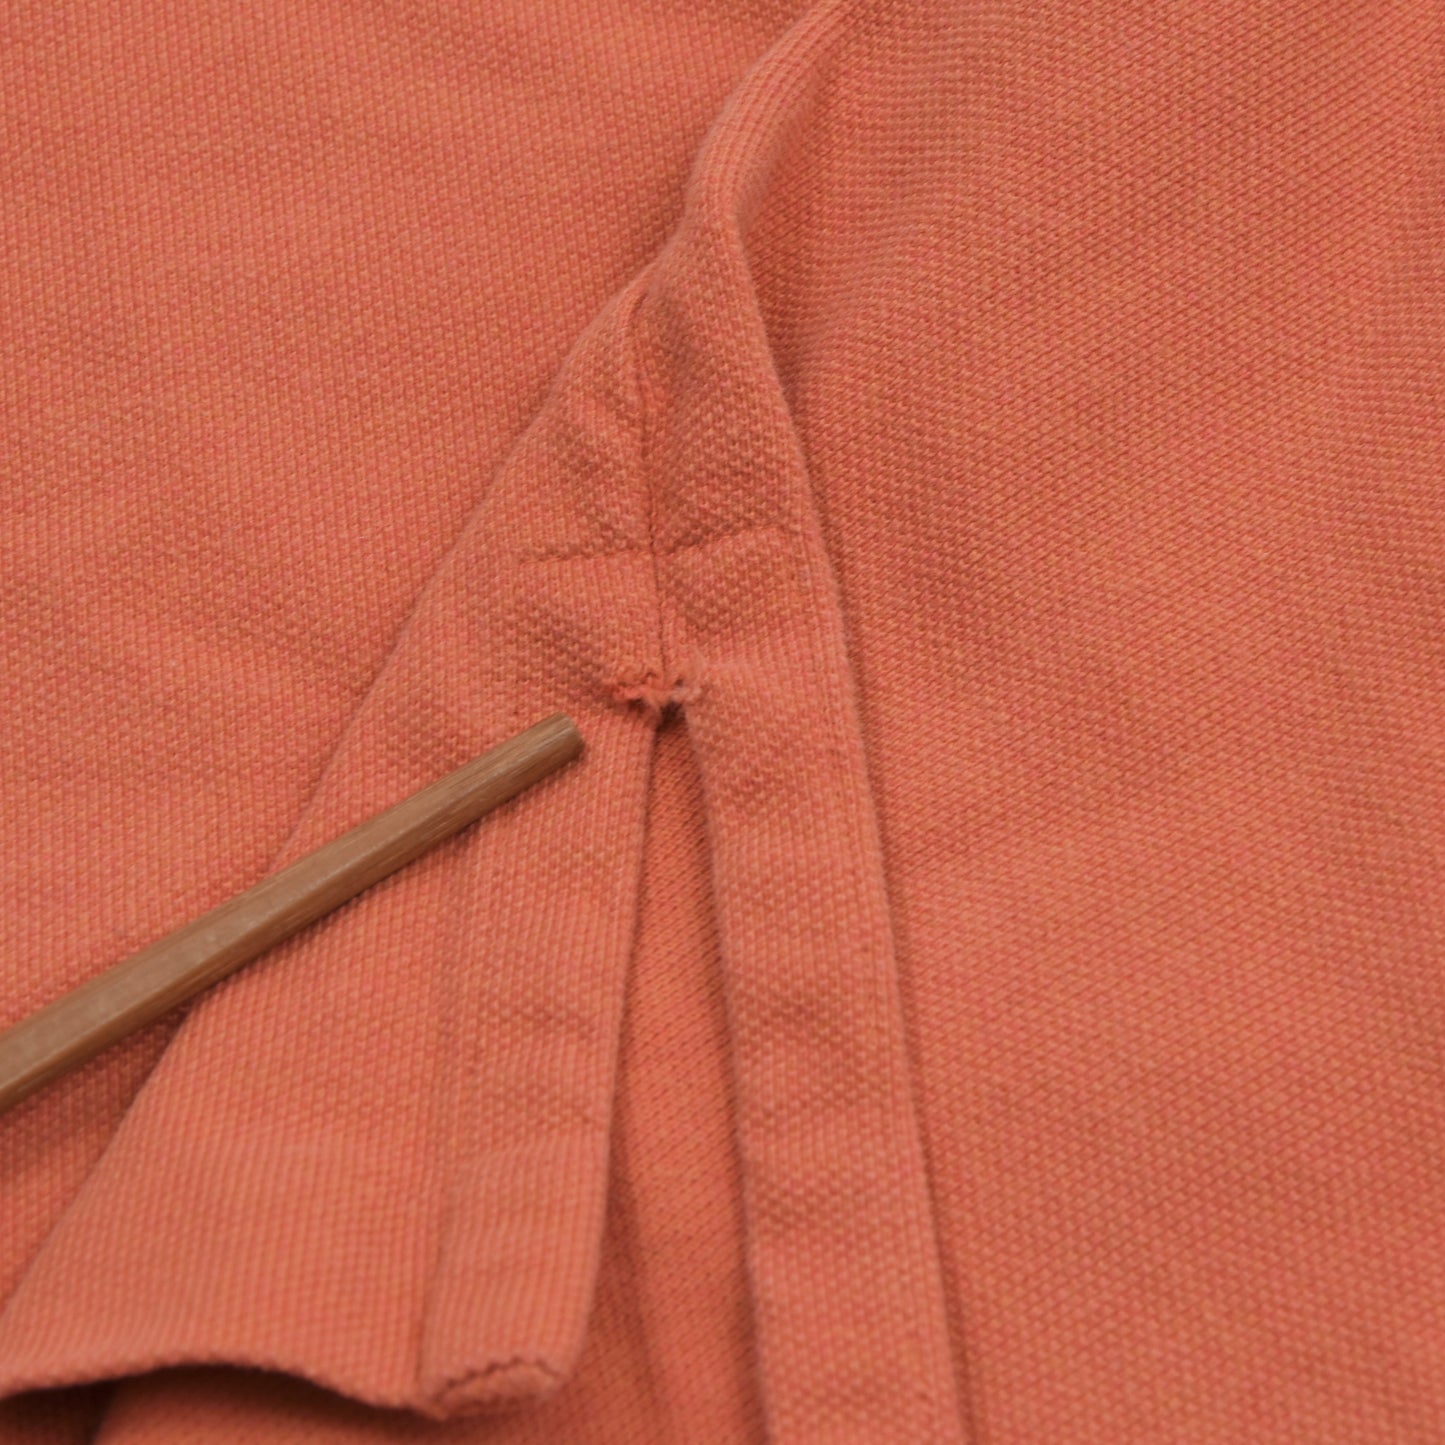 3x Polo Ralph Lauren Polo Shirts Shirts Size S - Red, Pink Striped, Orange